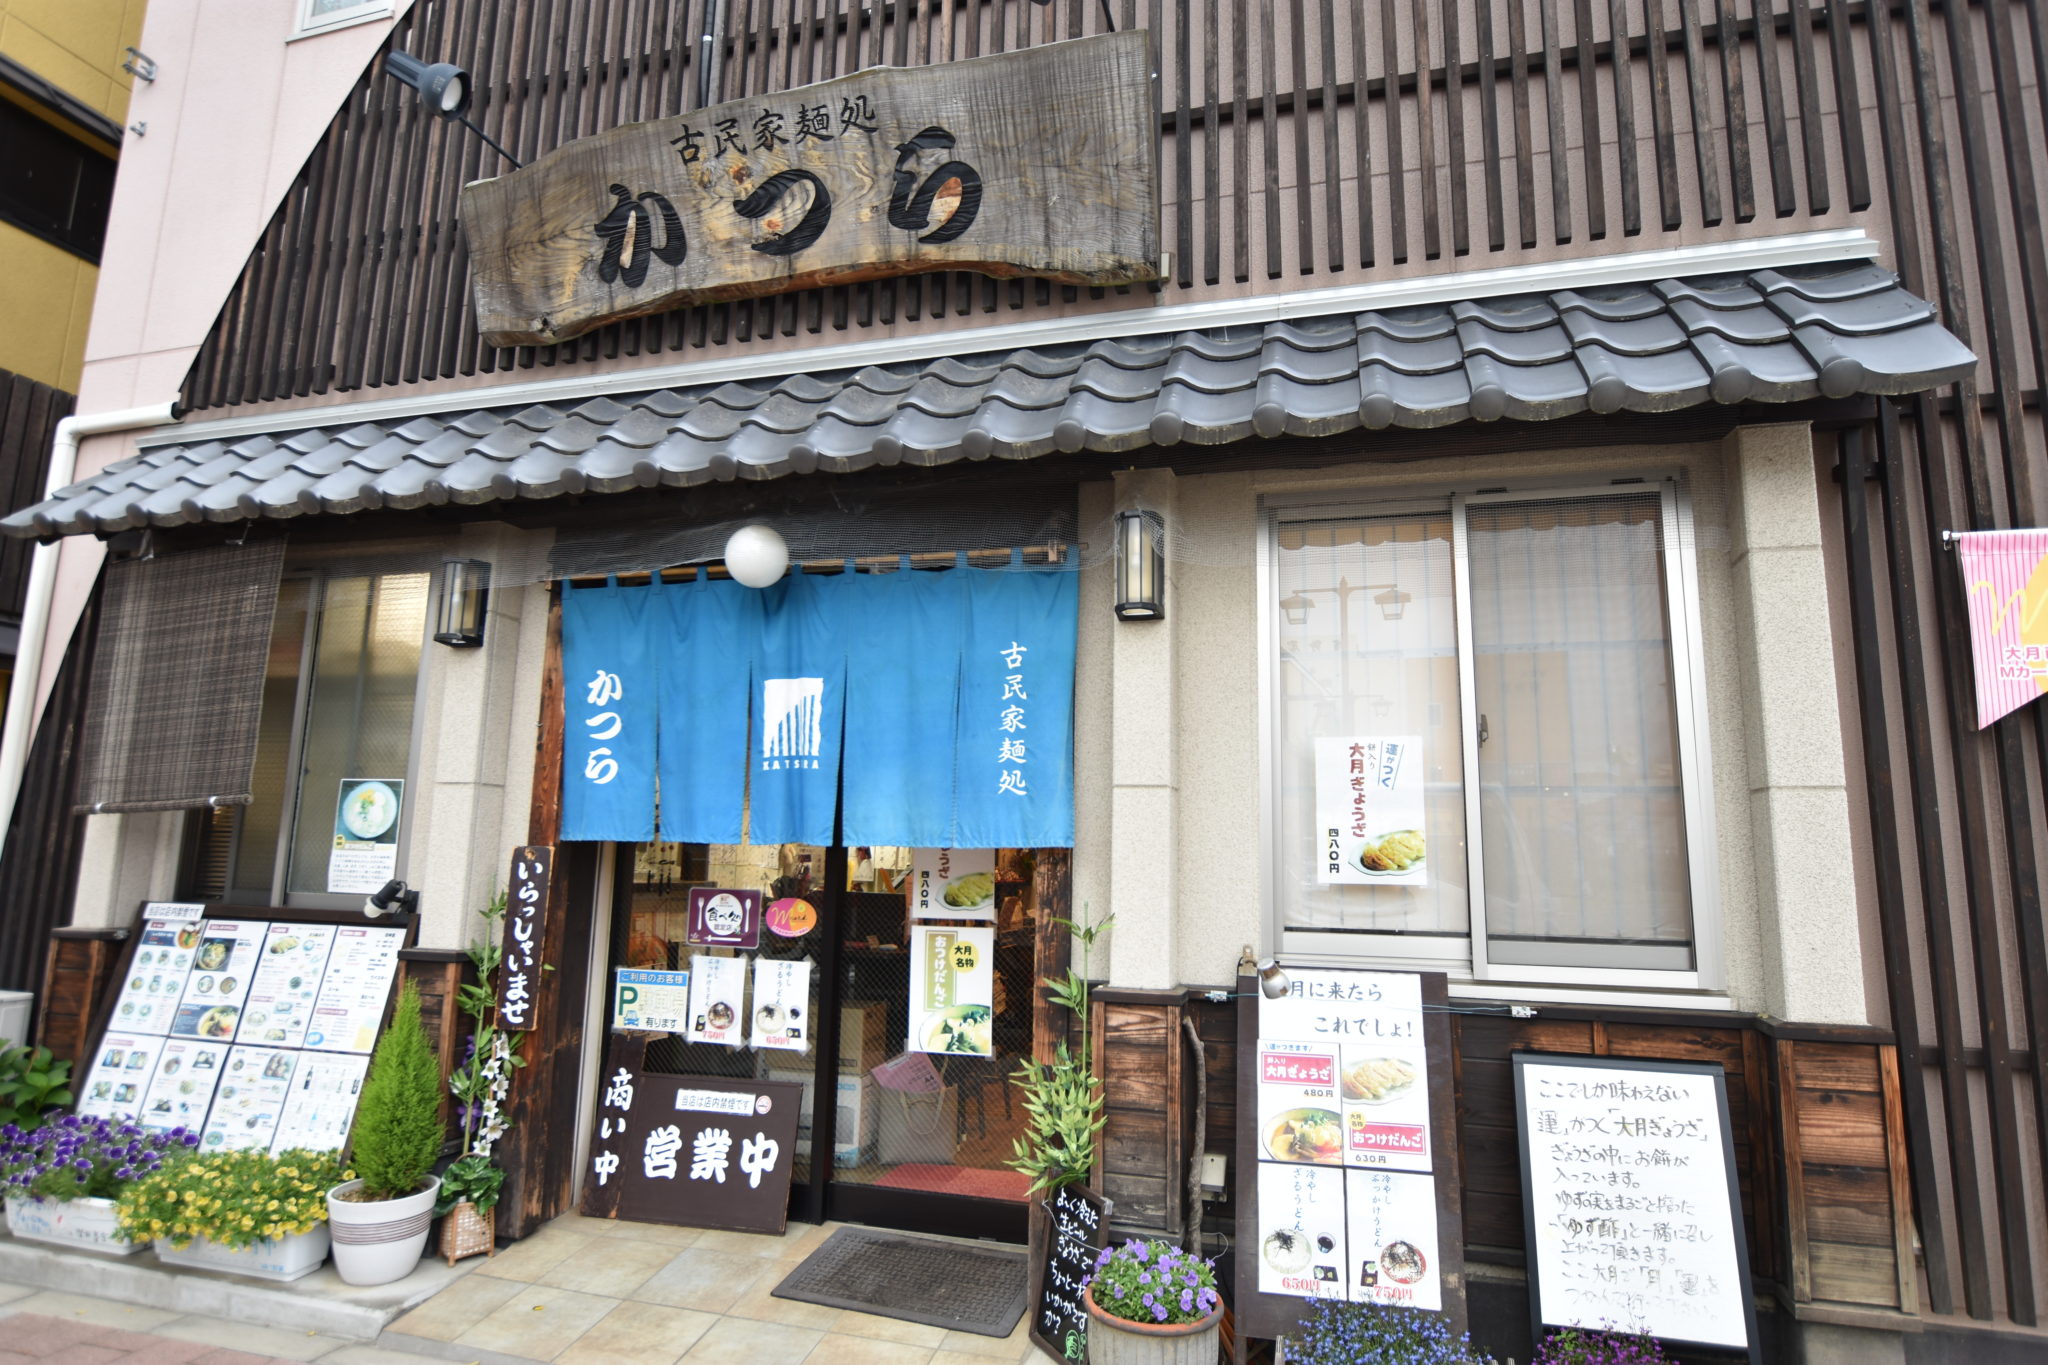 Old folk house noodle shop wig Otsuki city gourmet Japanese food 5